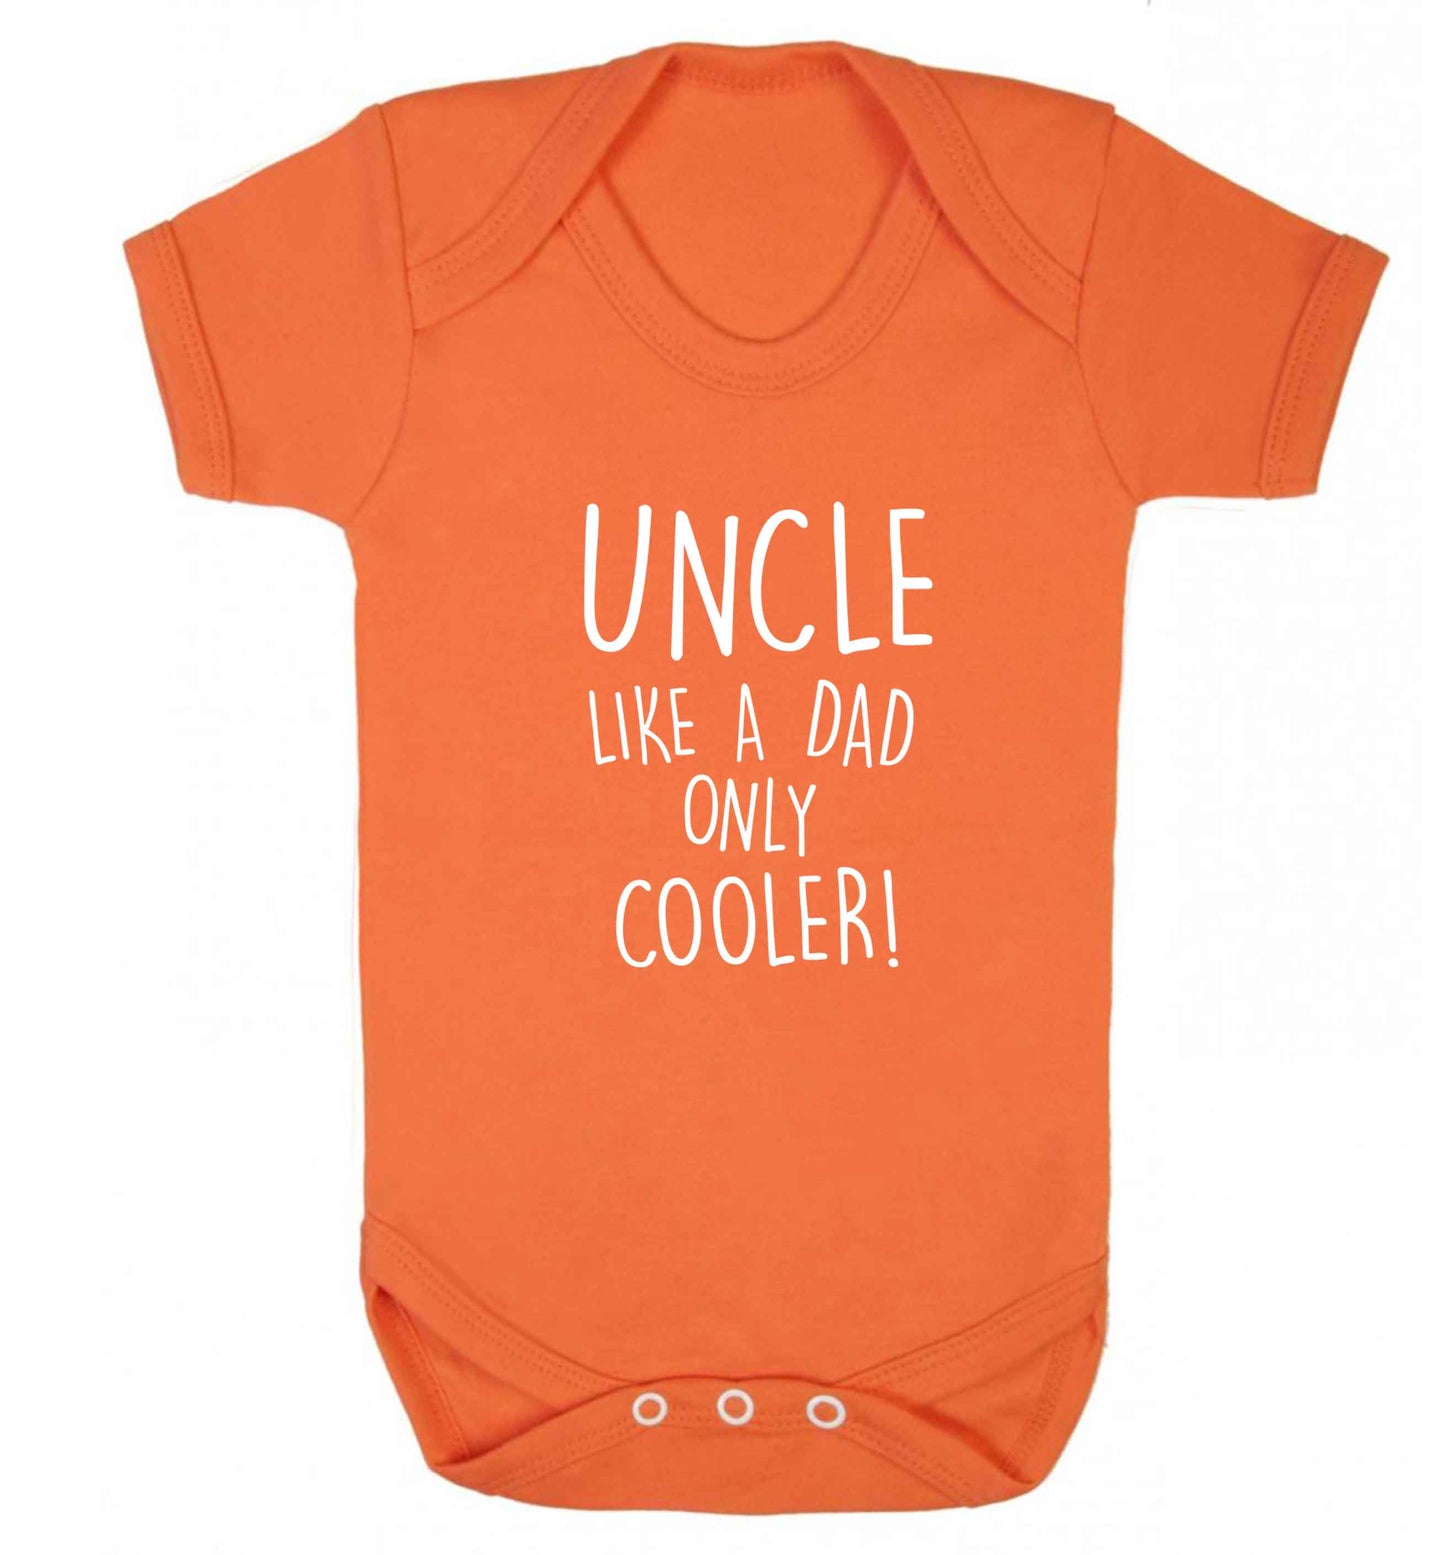 Uncle like a dad only cooler baby vest orange 18-24 months